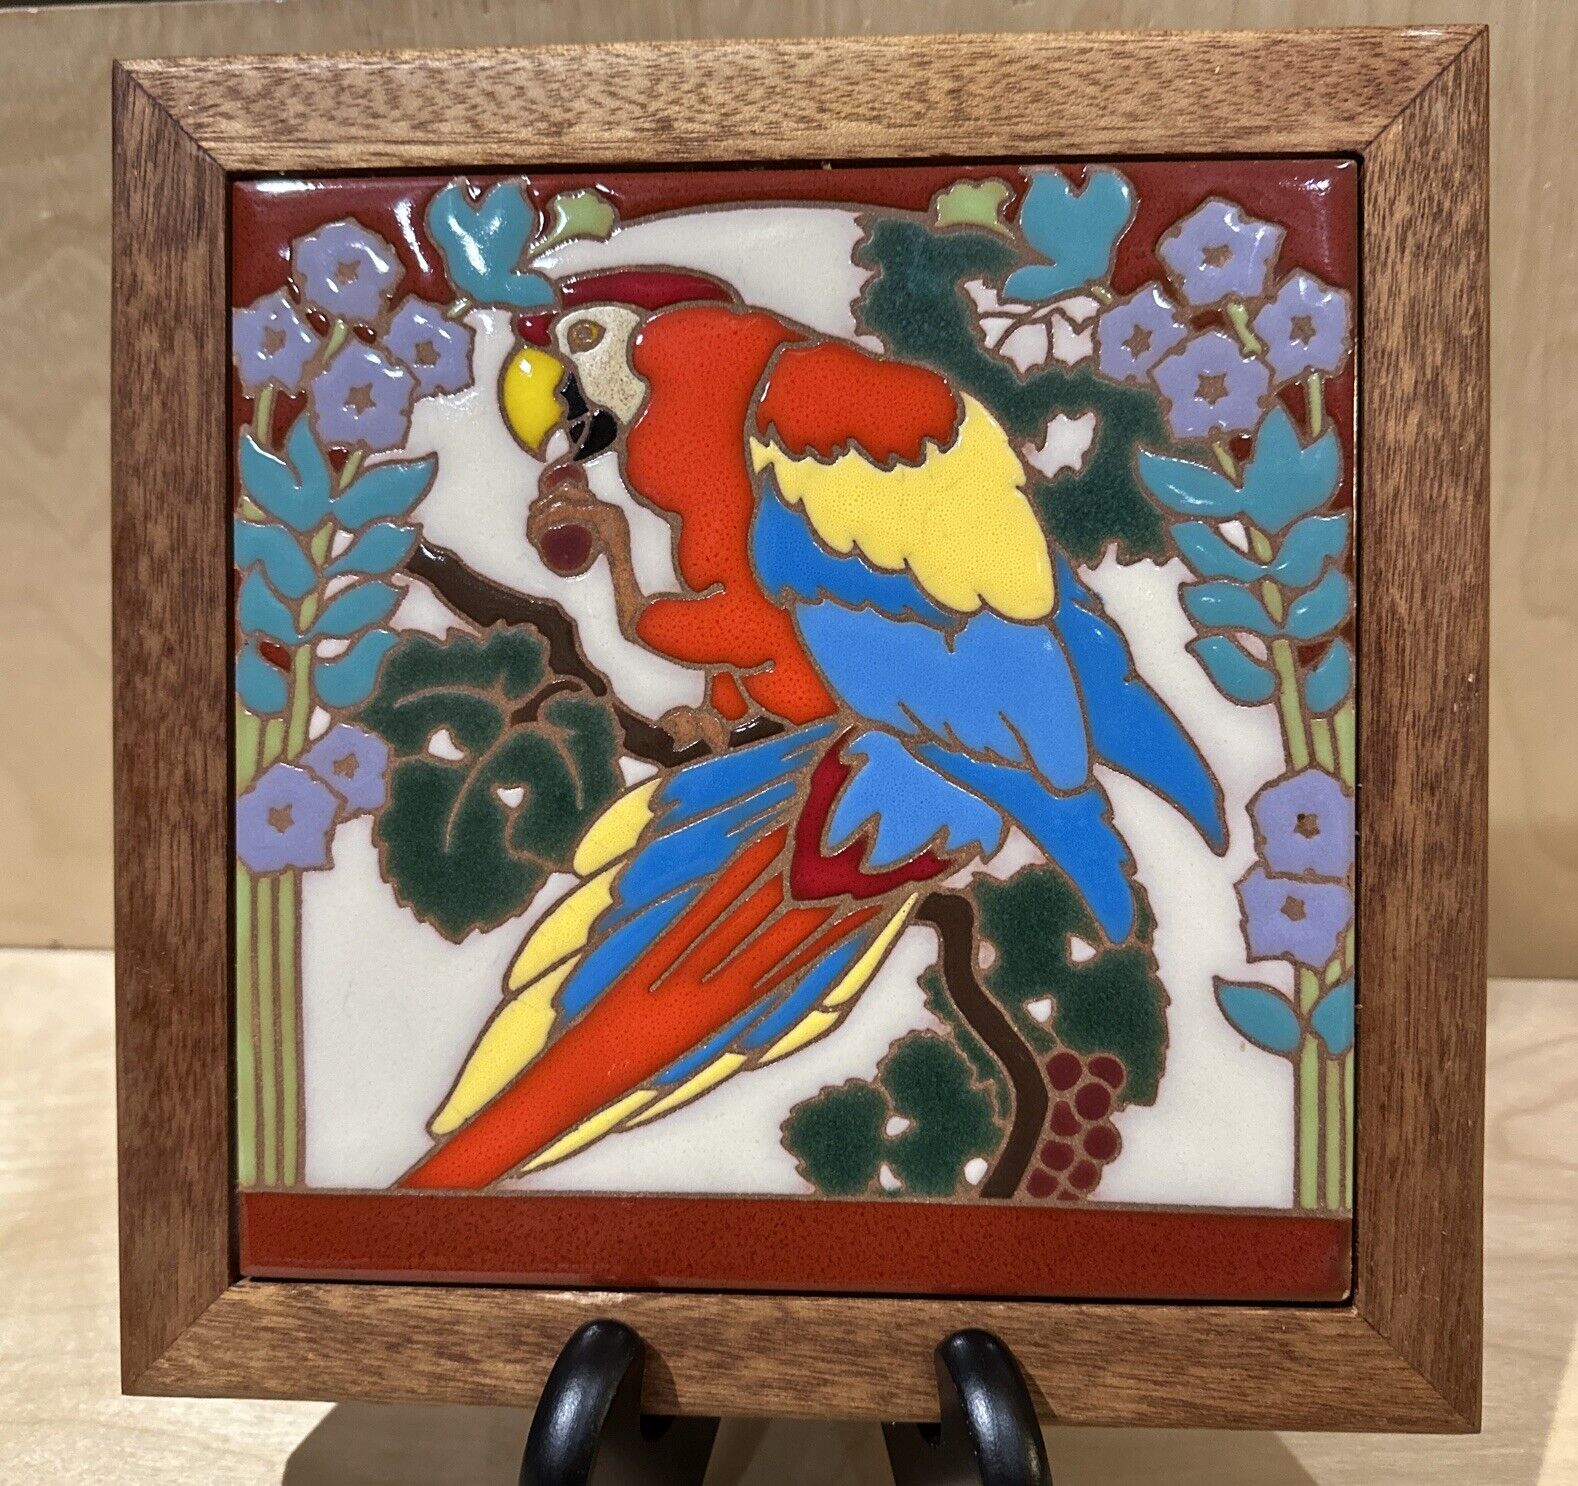 Vintage Arius Santa Fe Art Tile Parrot Sitting On Branch Wooden Frame  EUC